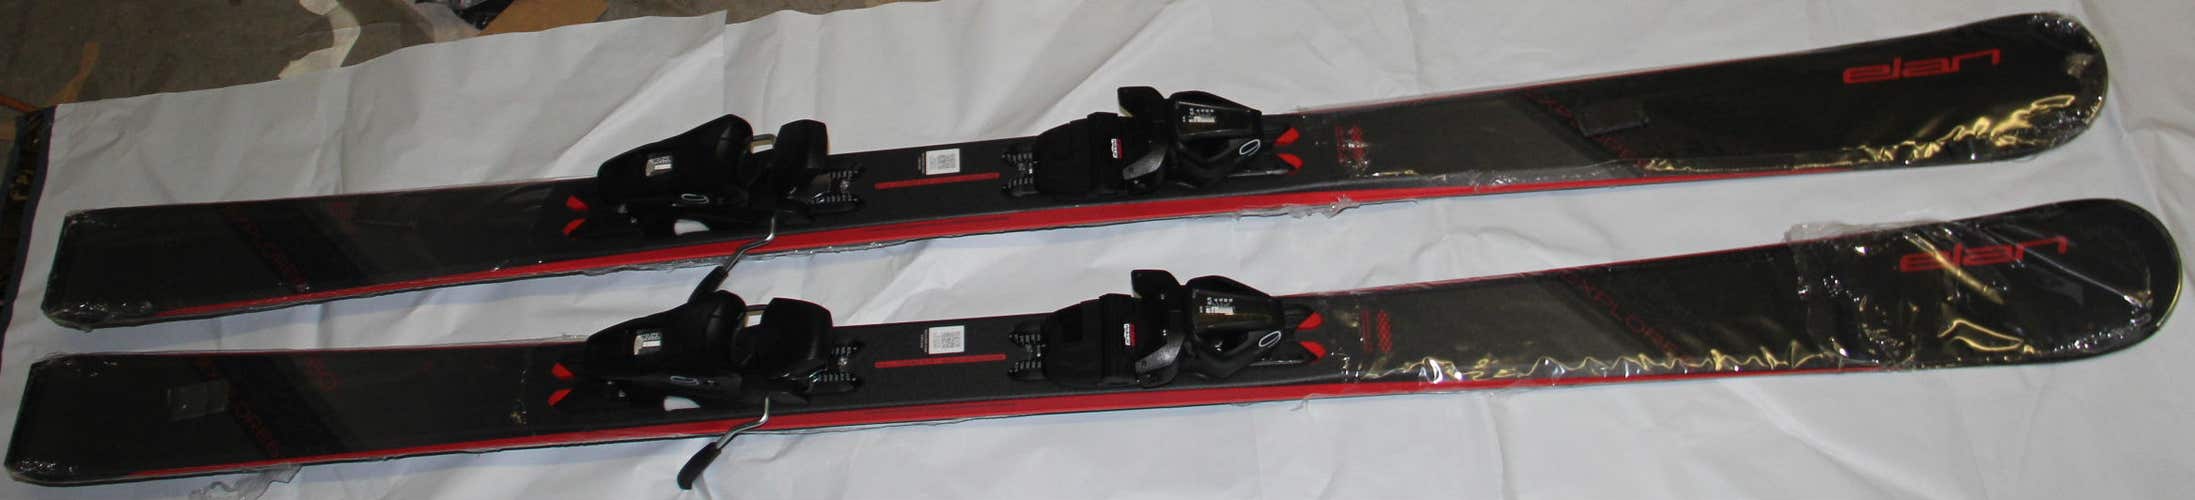 NEW Elan Explore 6 red 152cm skis men's with EL 9.0 GW size adjustable bindings